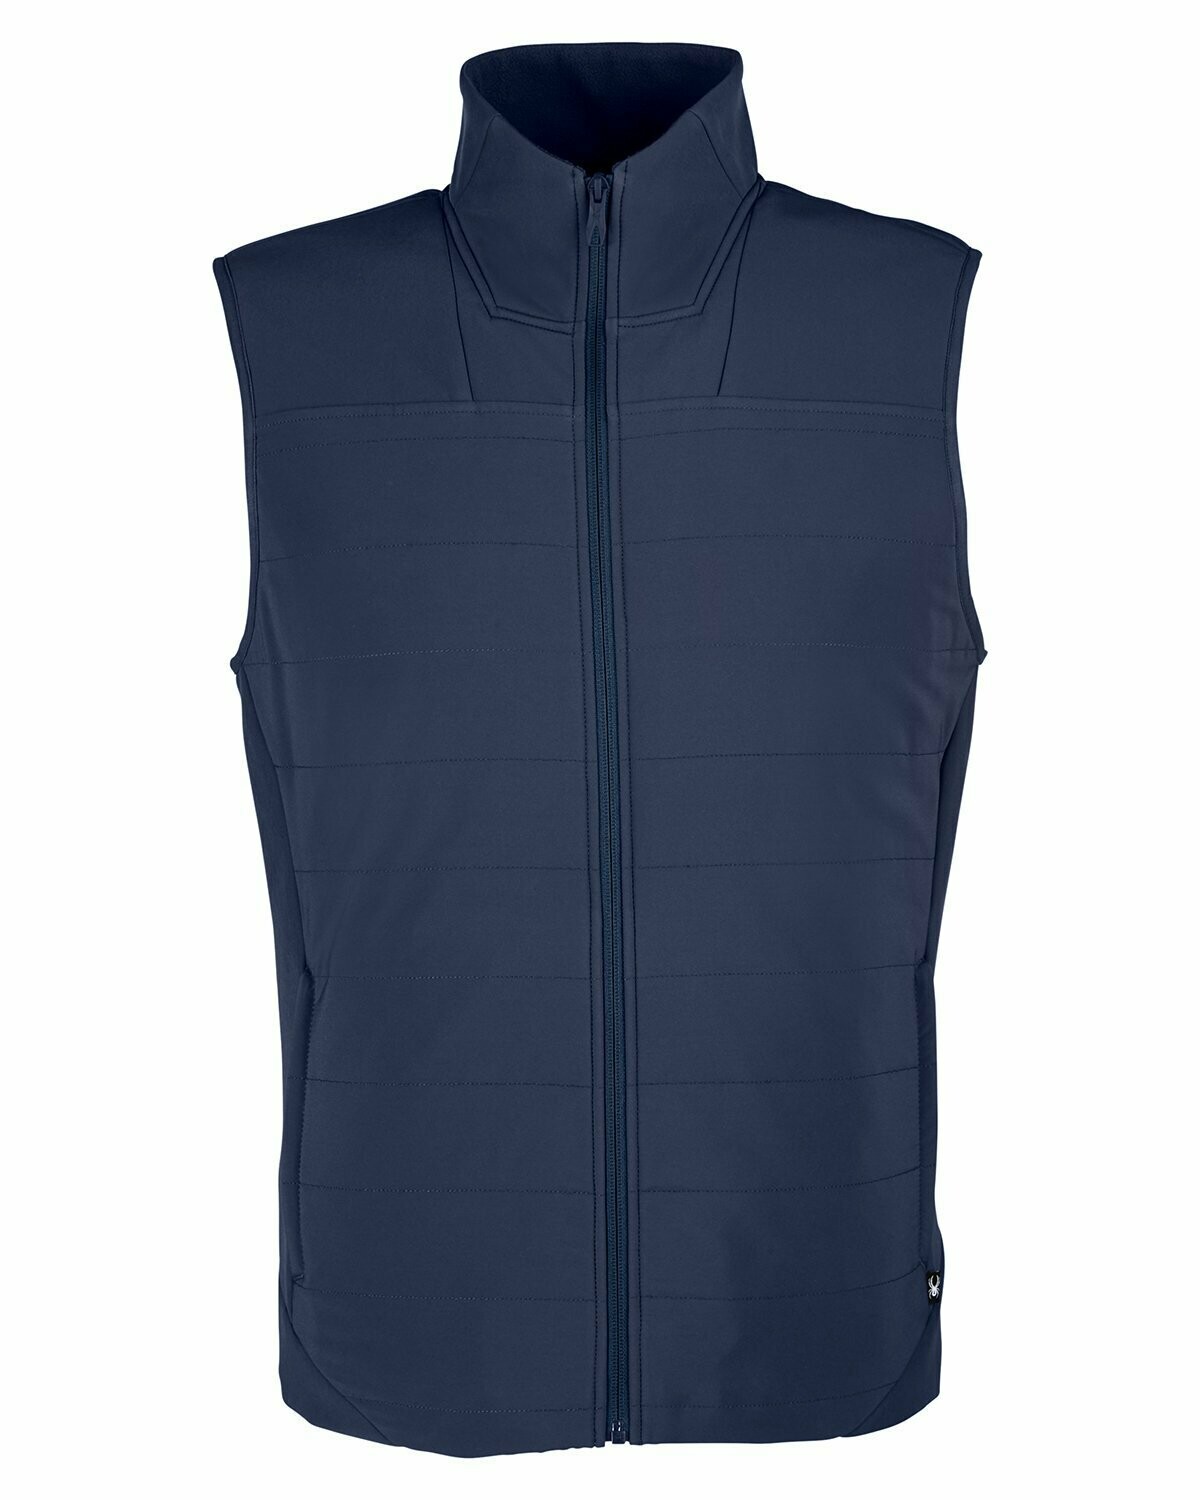 Spyder Transit Vest, Colours: FRONTIER